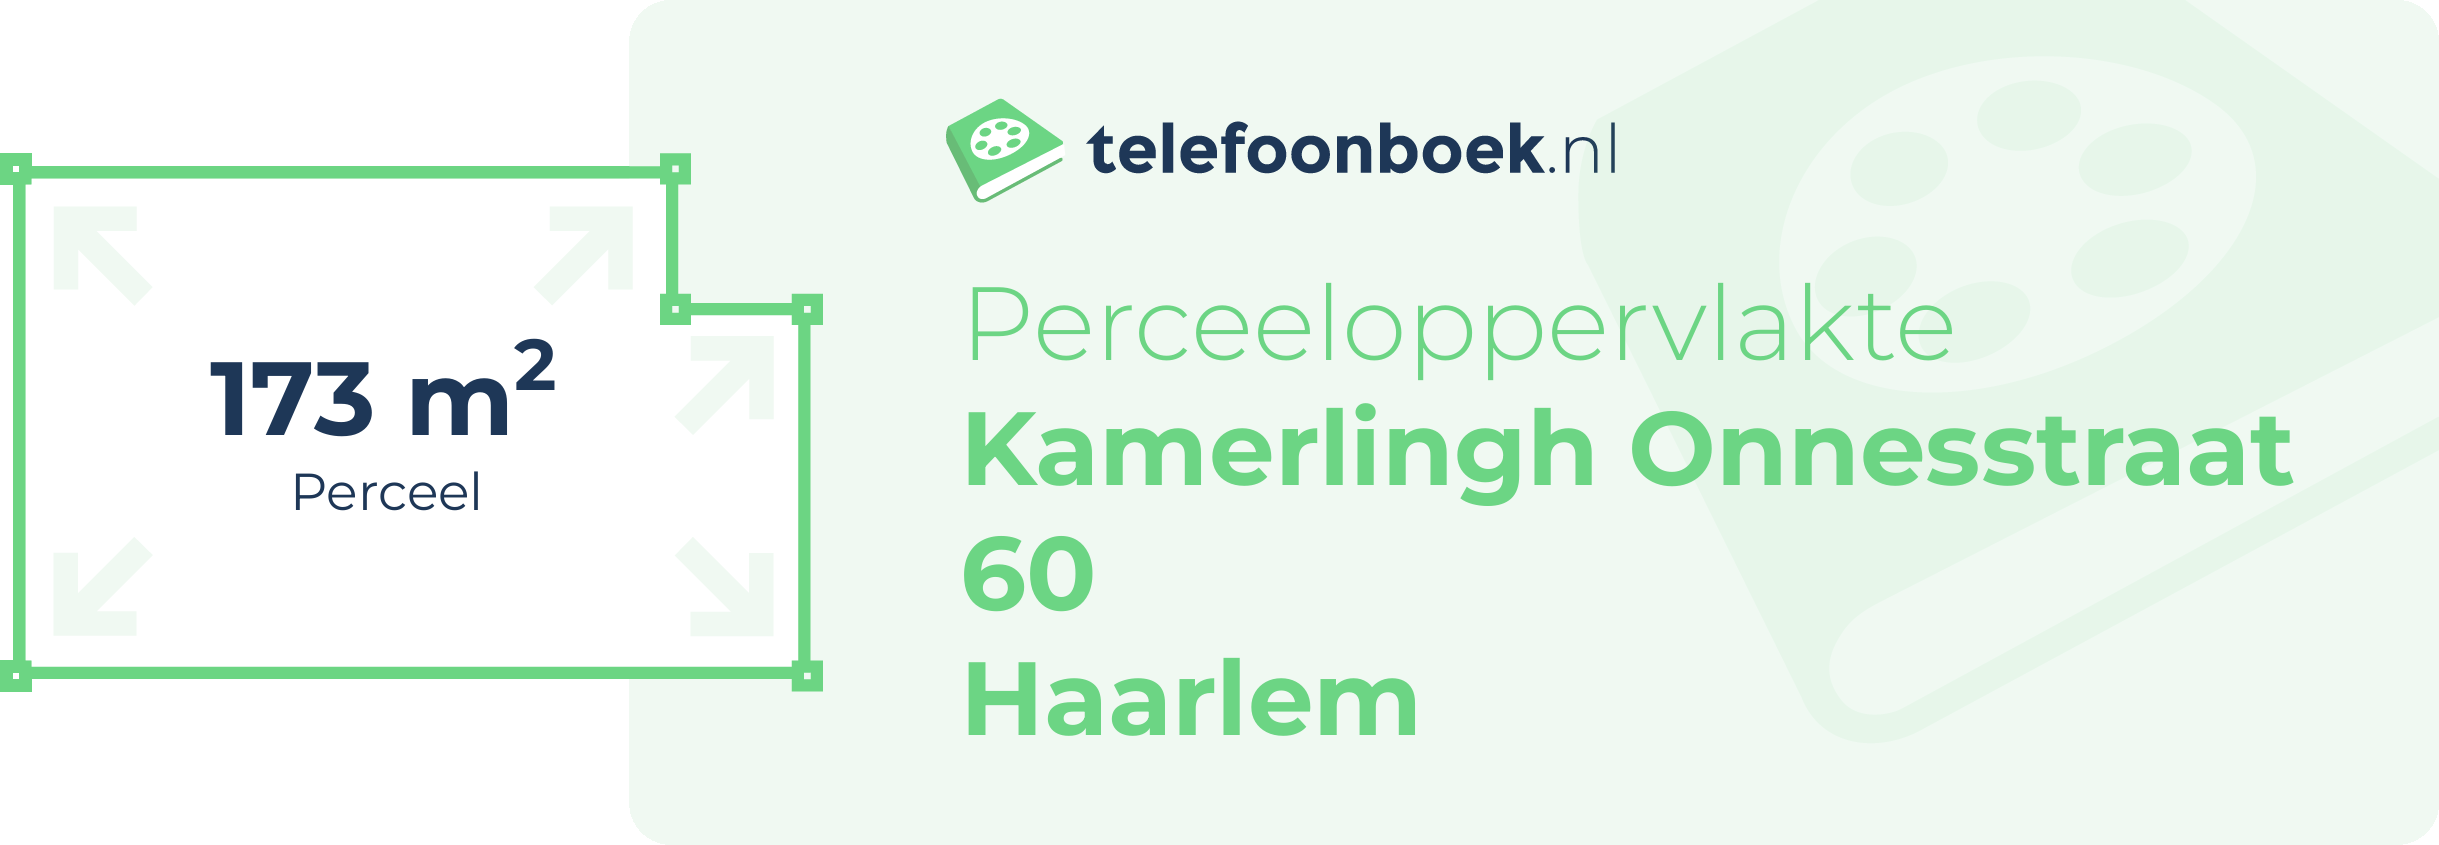 Perceeloppervlakte Kamerlingh Onnesstraat 60 Haarlem